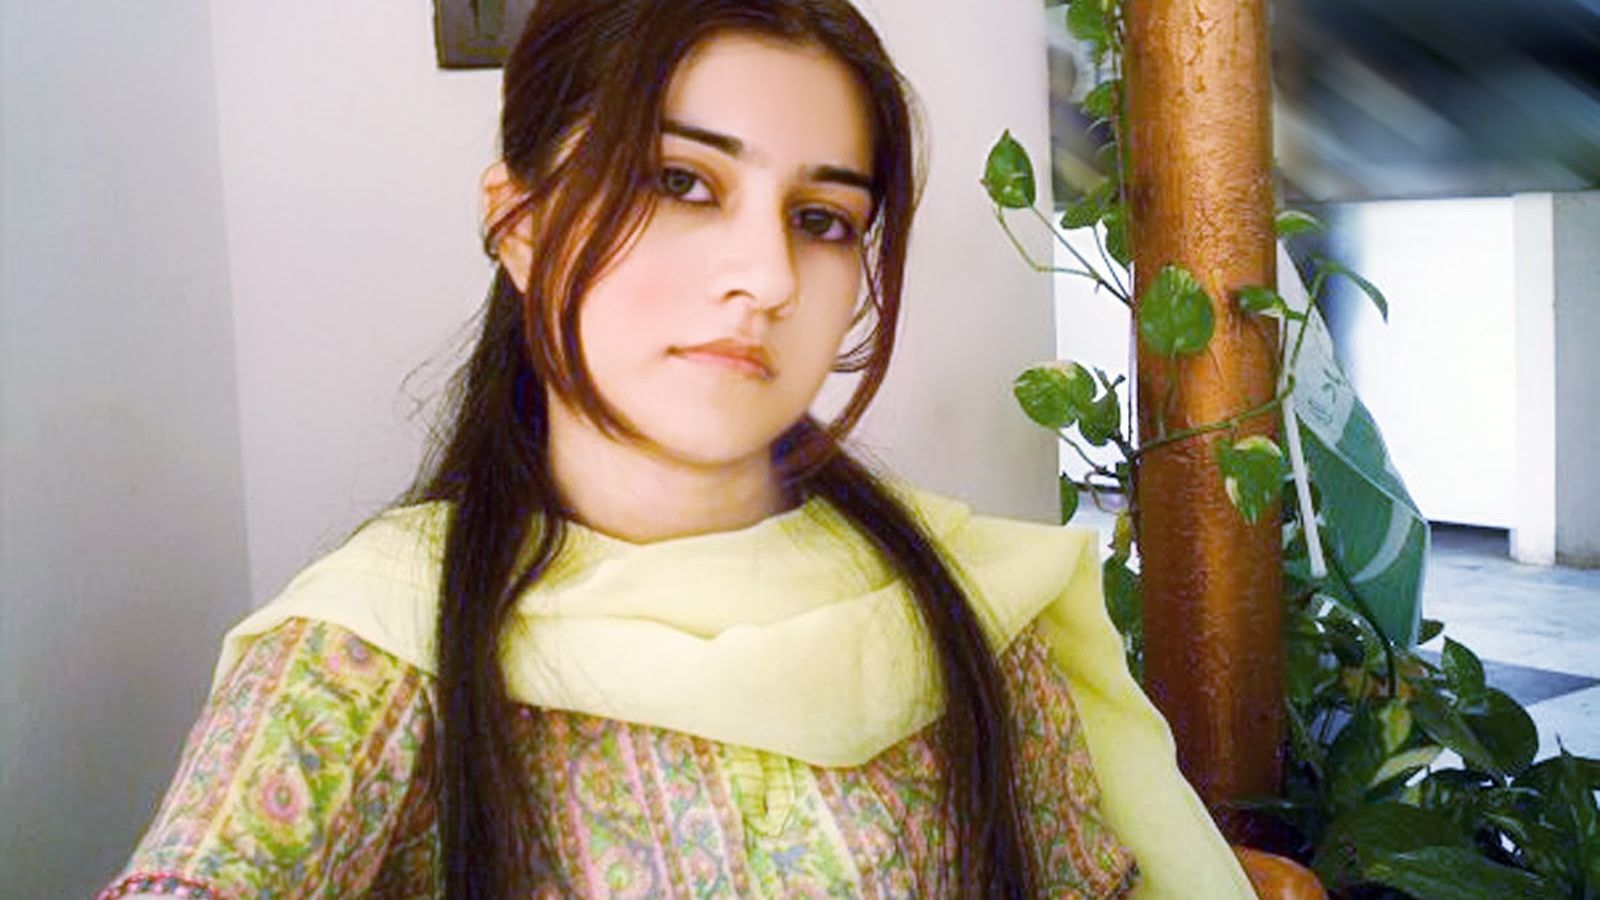 Pakistani Girls Wallpapers - Wallpaper Cave